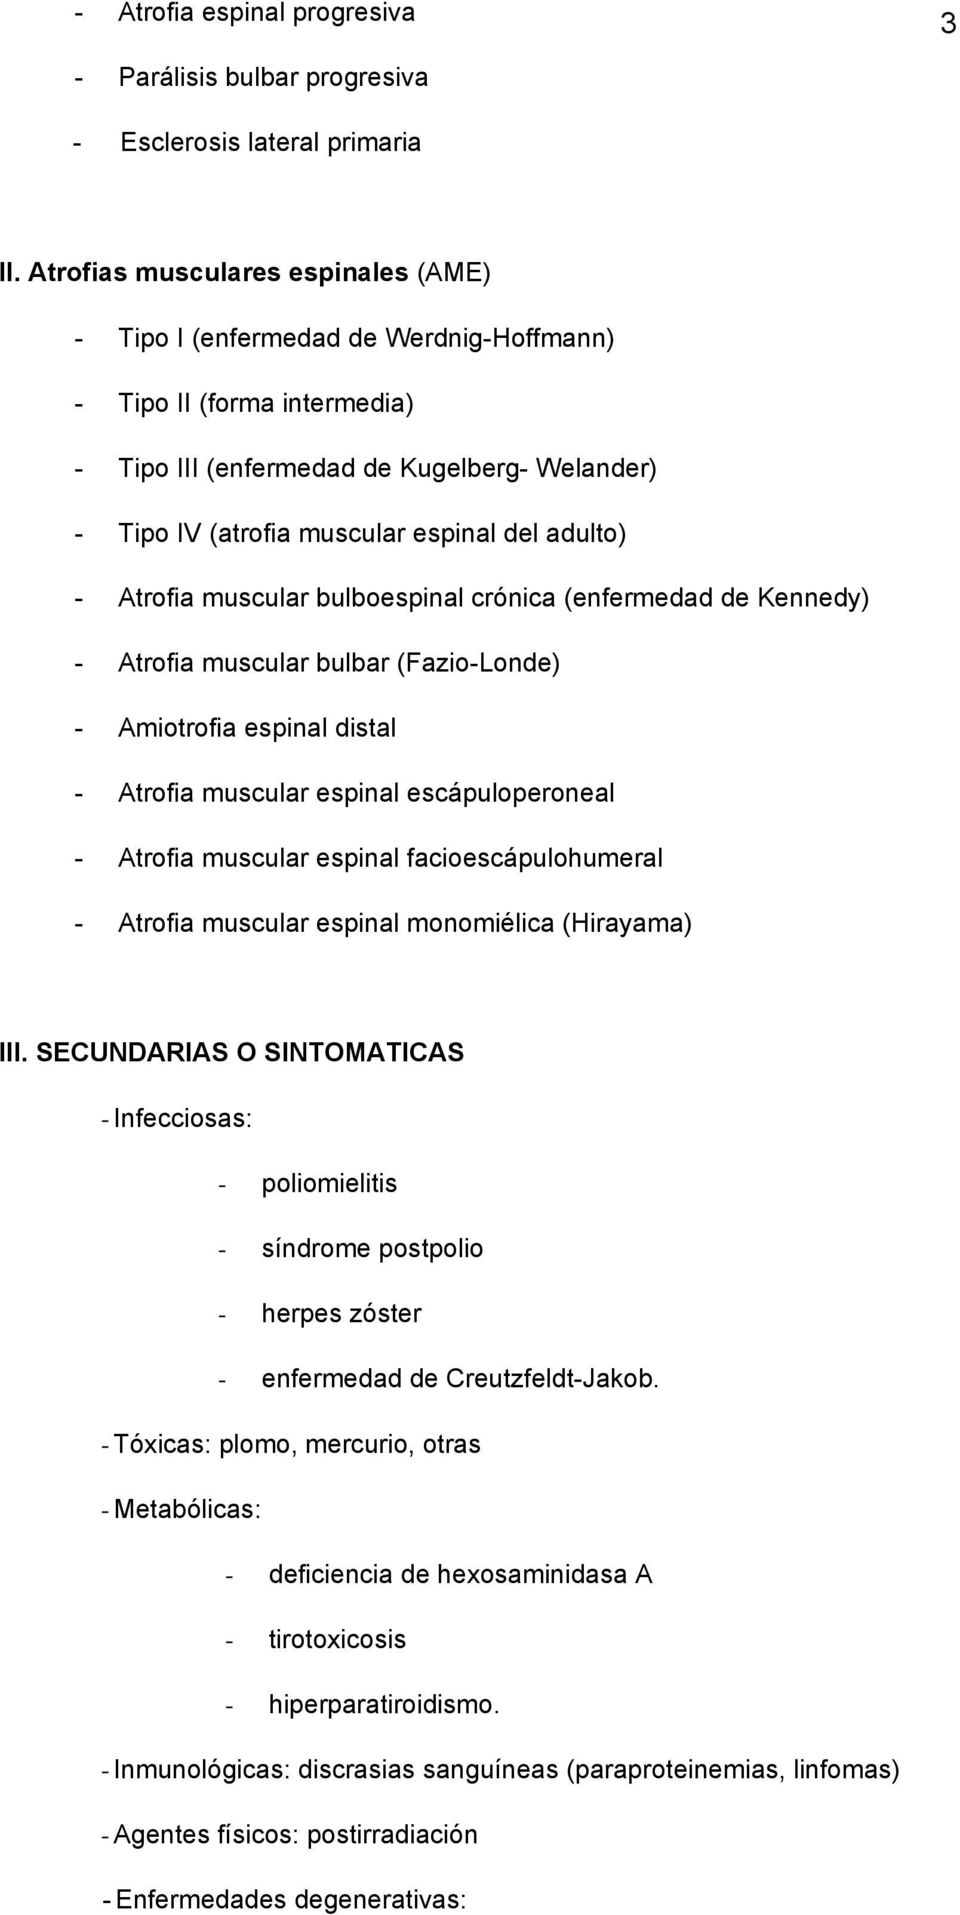 adulto) - Atrofia muscular bulboespinal crónica (enfermedad de Kennedy) - Atrofia muscular bulbar (Fazio-Londe) - Amiotrofia espinal distal - Atrofia muscular espinal escápuloperoneal - Atrofia